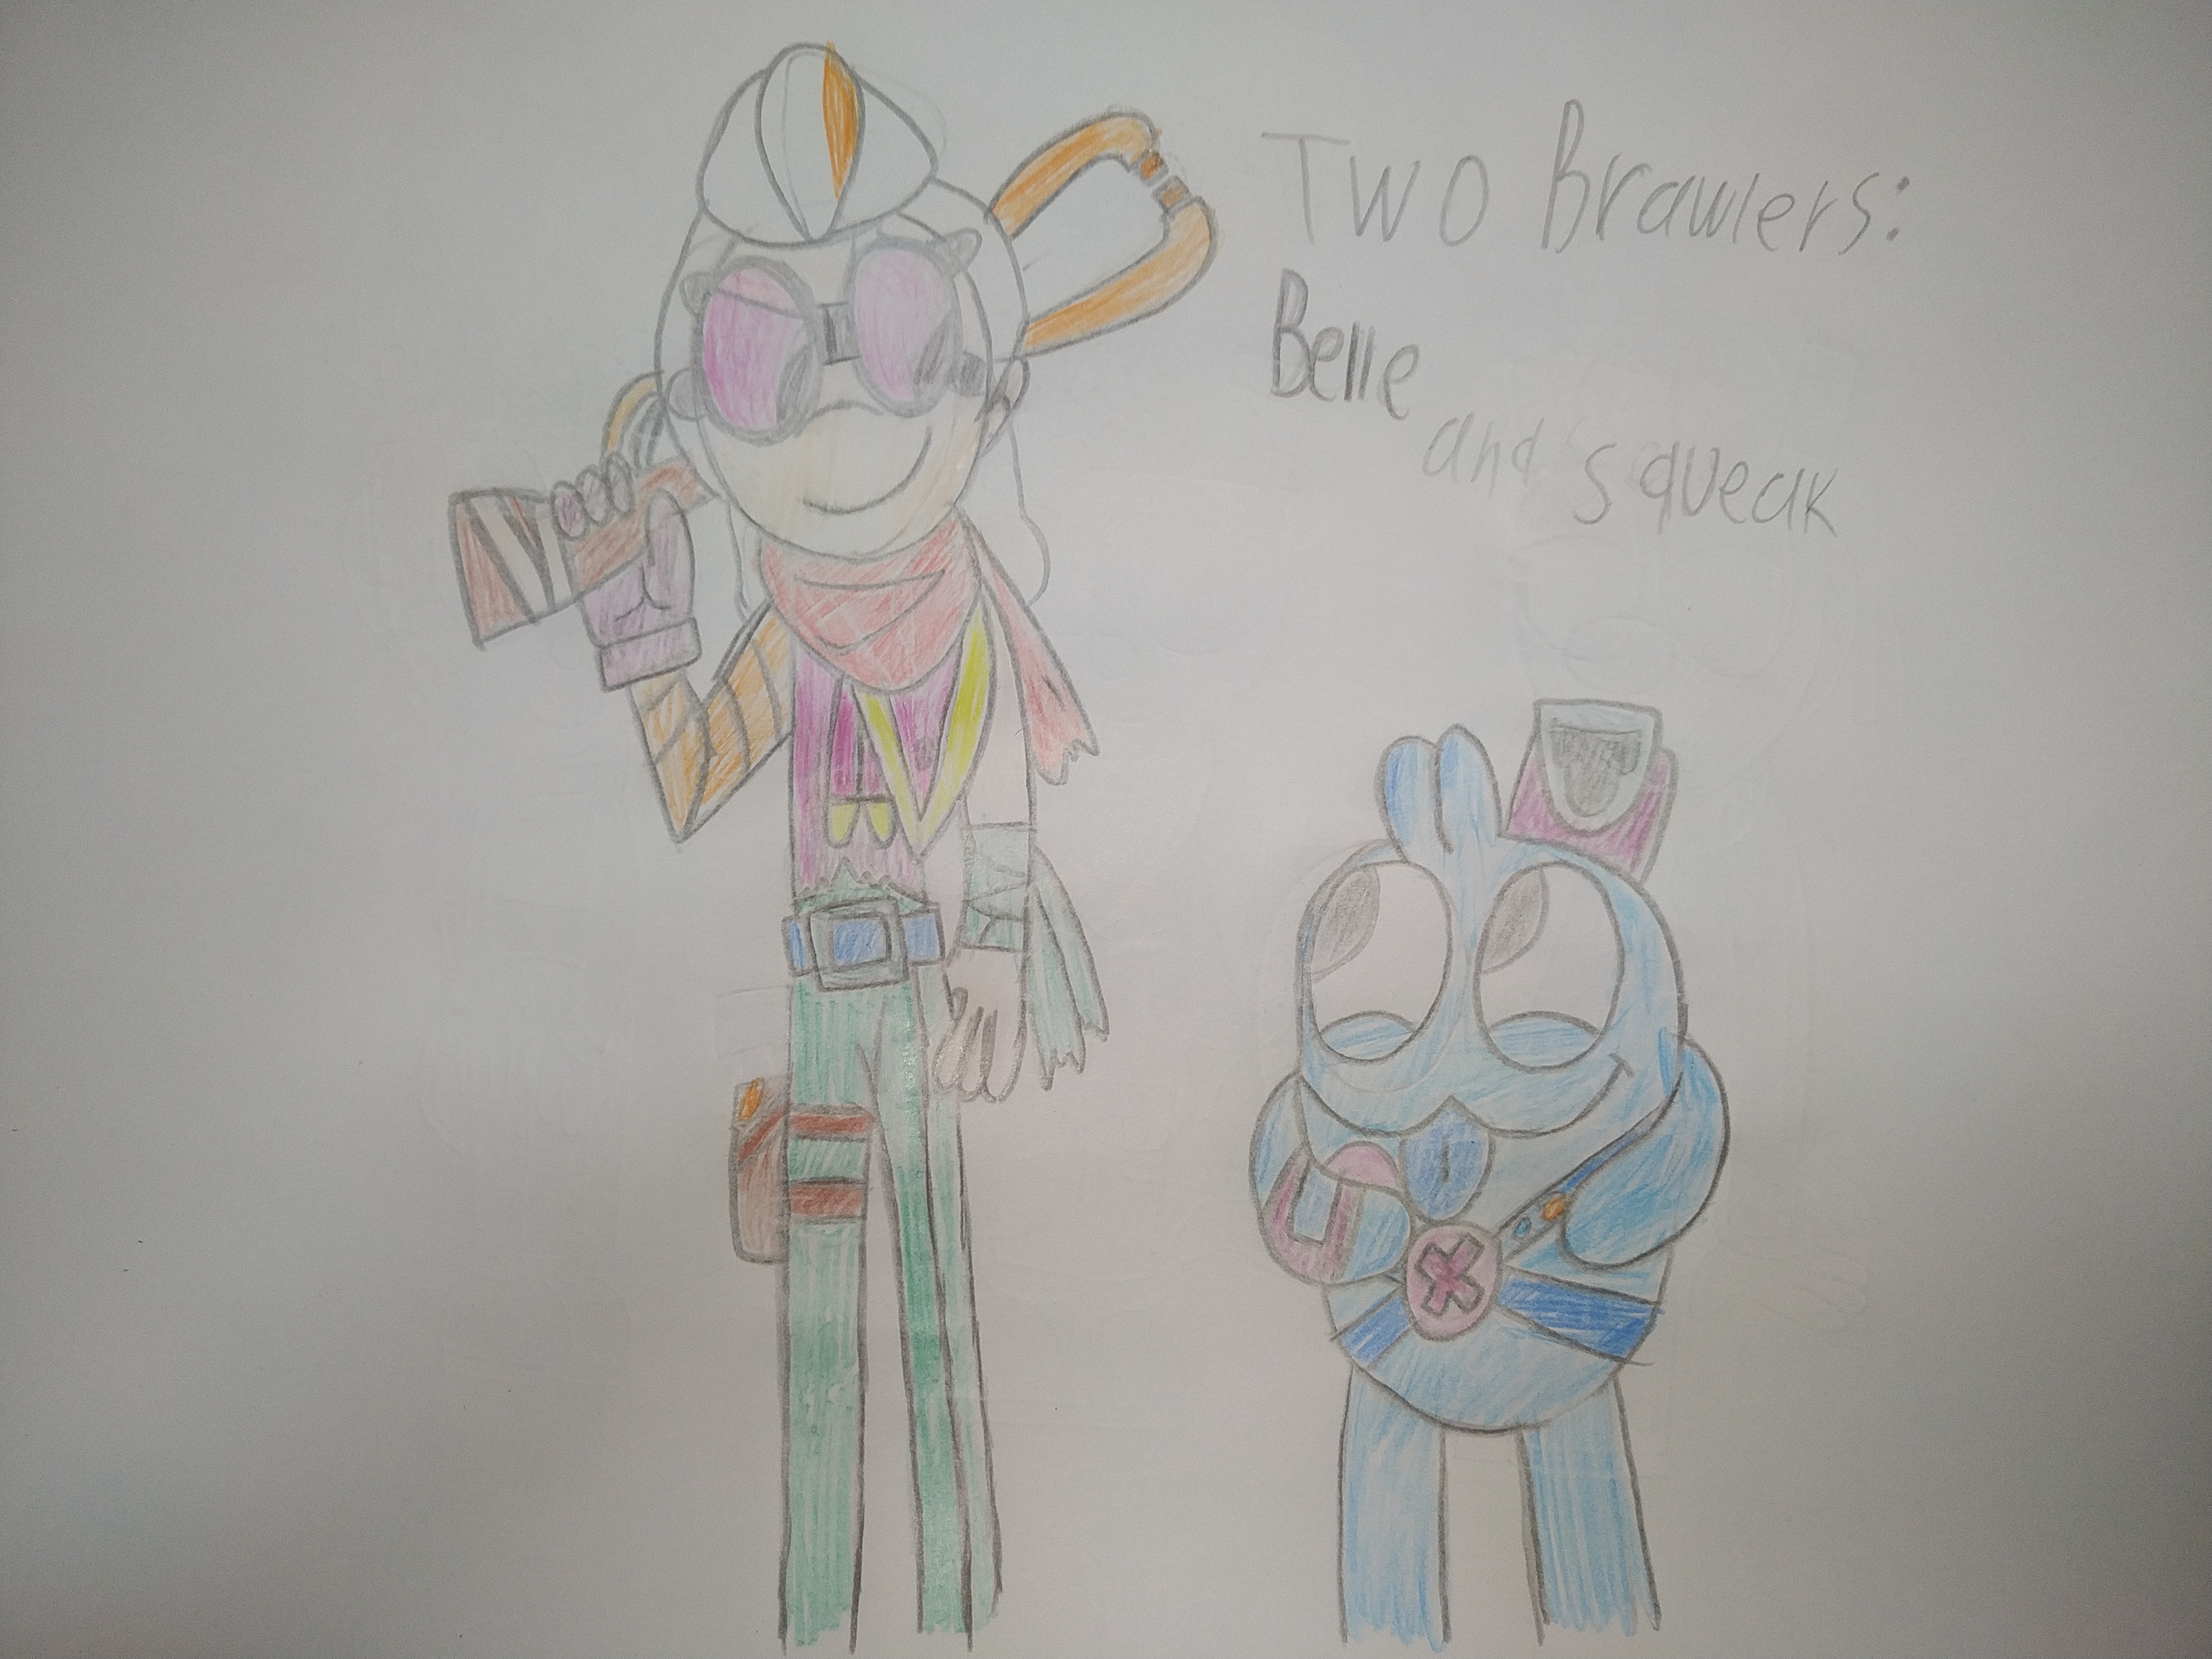 Two Brawlers Belle And Squeak Fandom - squeak super brawl stars